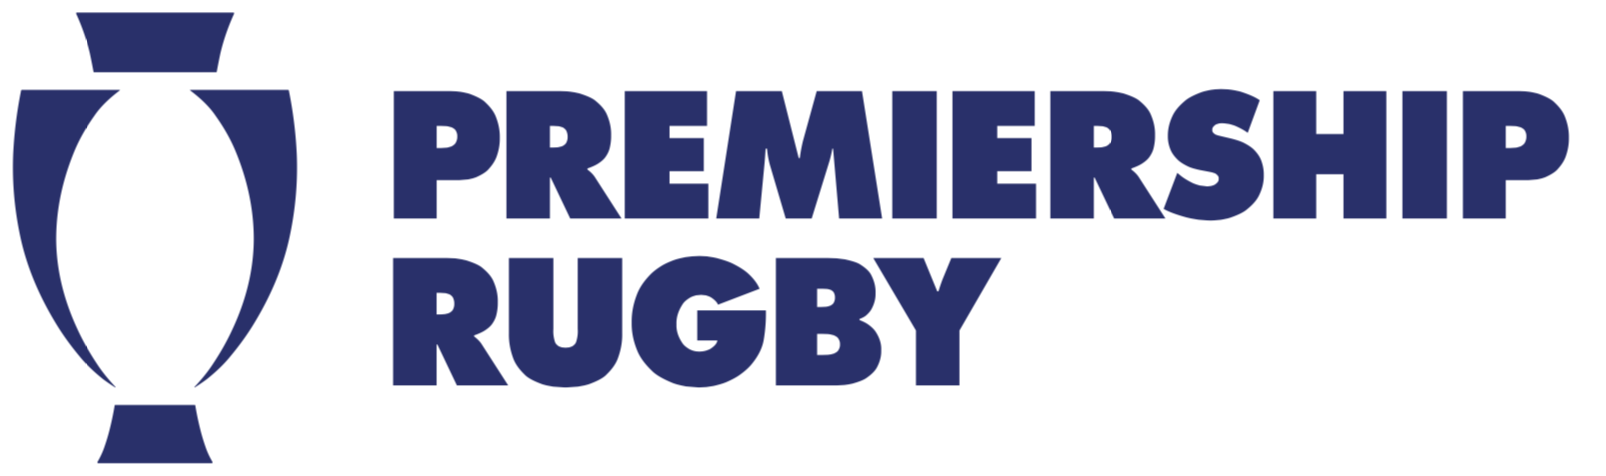 Премьершип. Premiership Rugby. Premiership Rugby logo. Эмблема регбийного Союза Великобритании. Saracens Rugby logo.